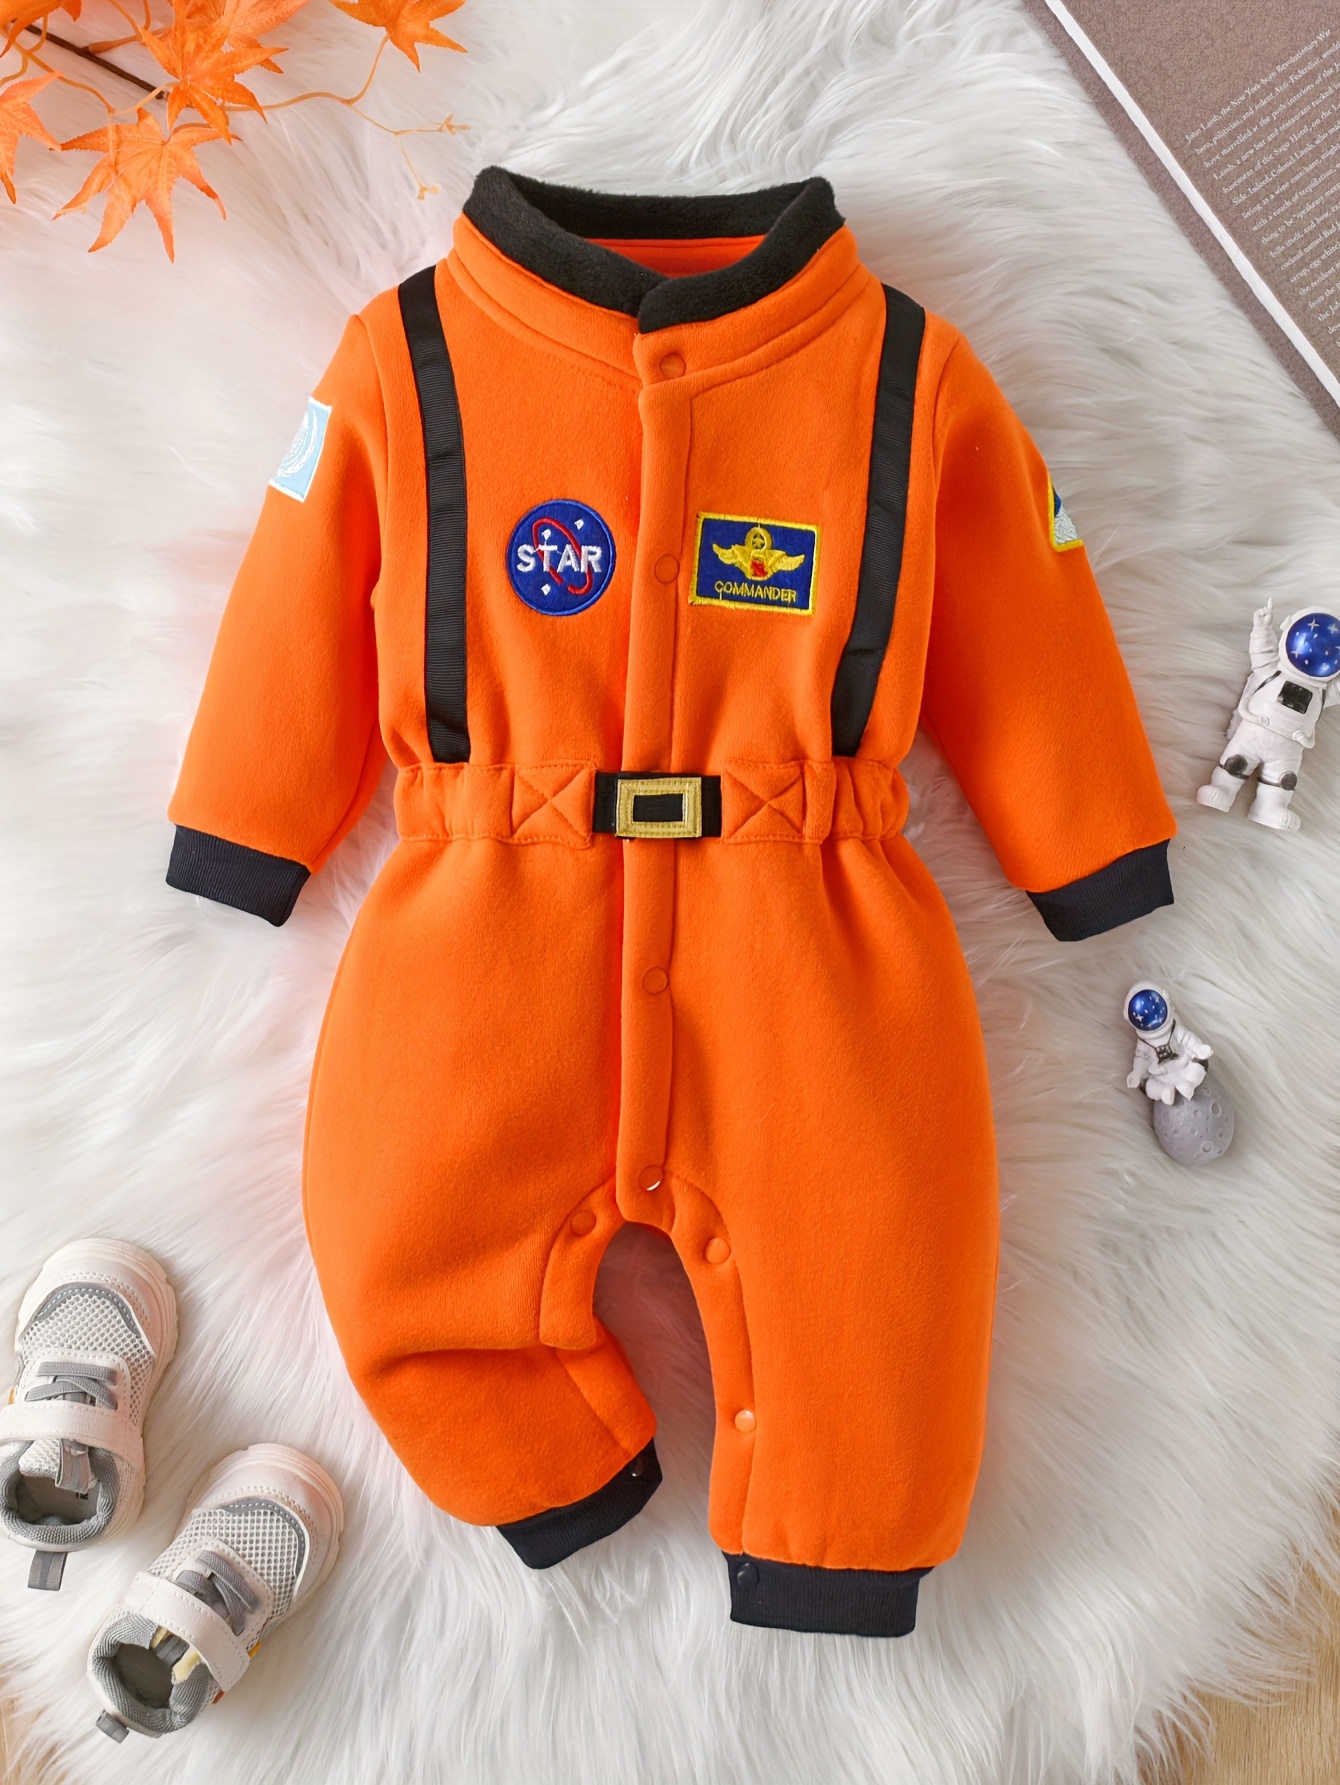 Disfraz Astronauta Niño